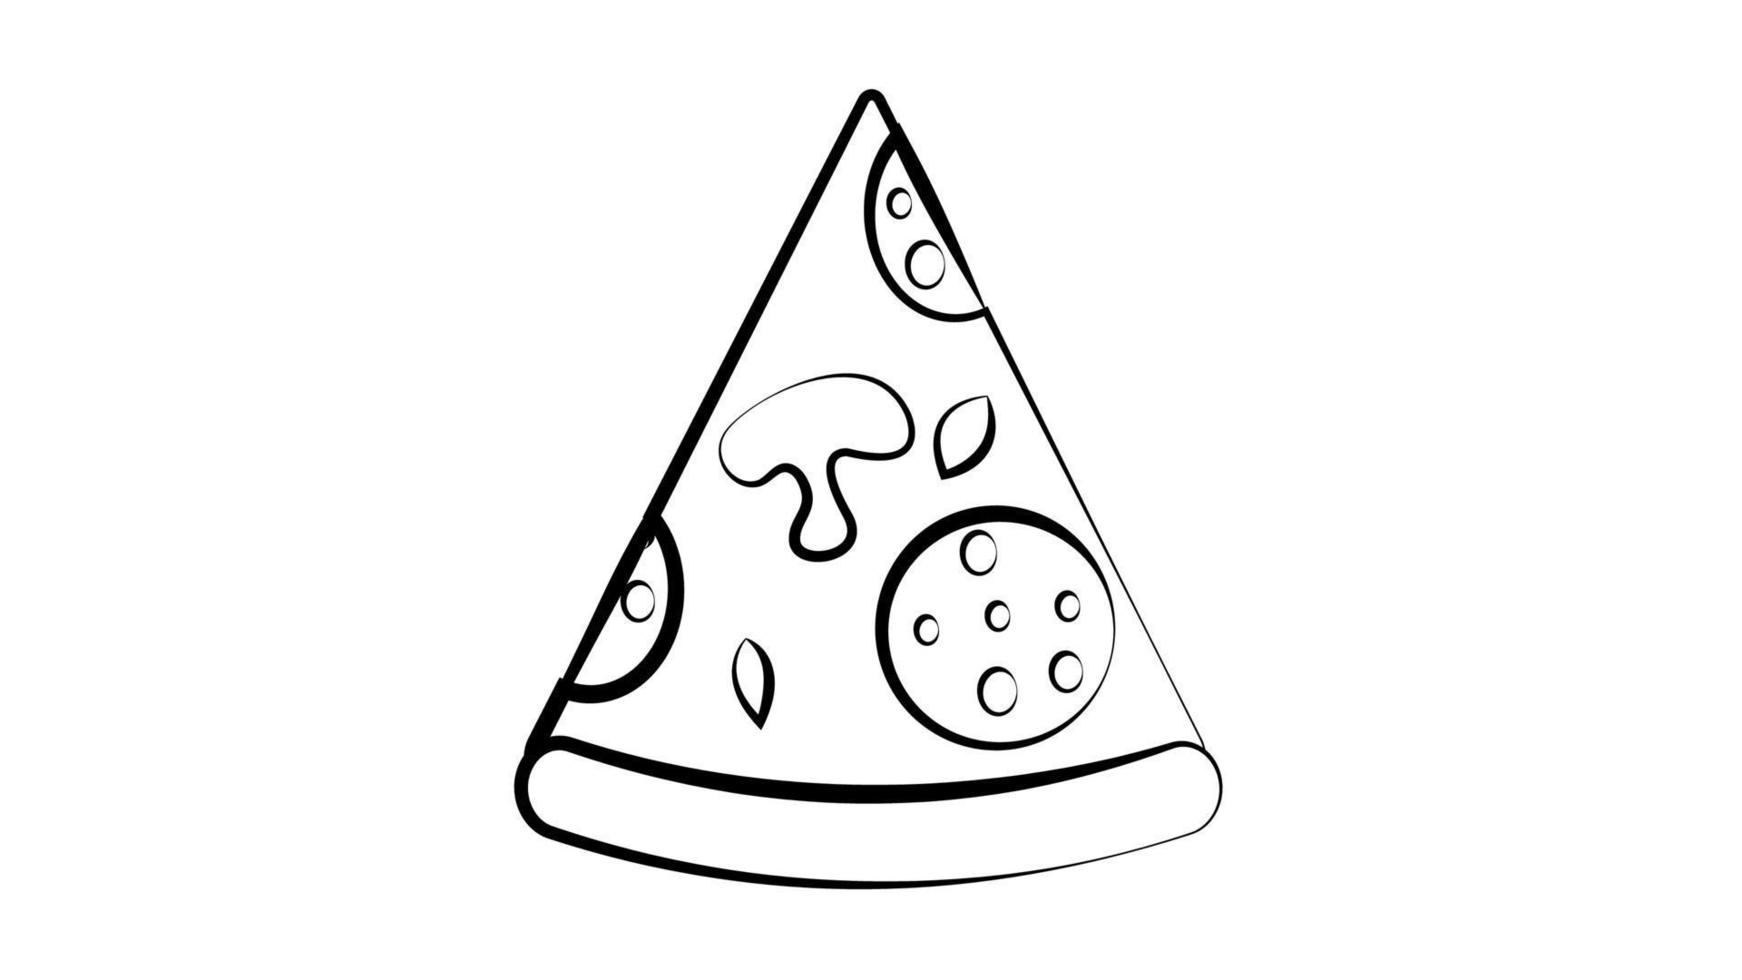 Italian Pizza hand drawn illustration. Pizza slice. Packaging design template. Sketch illustration vector